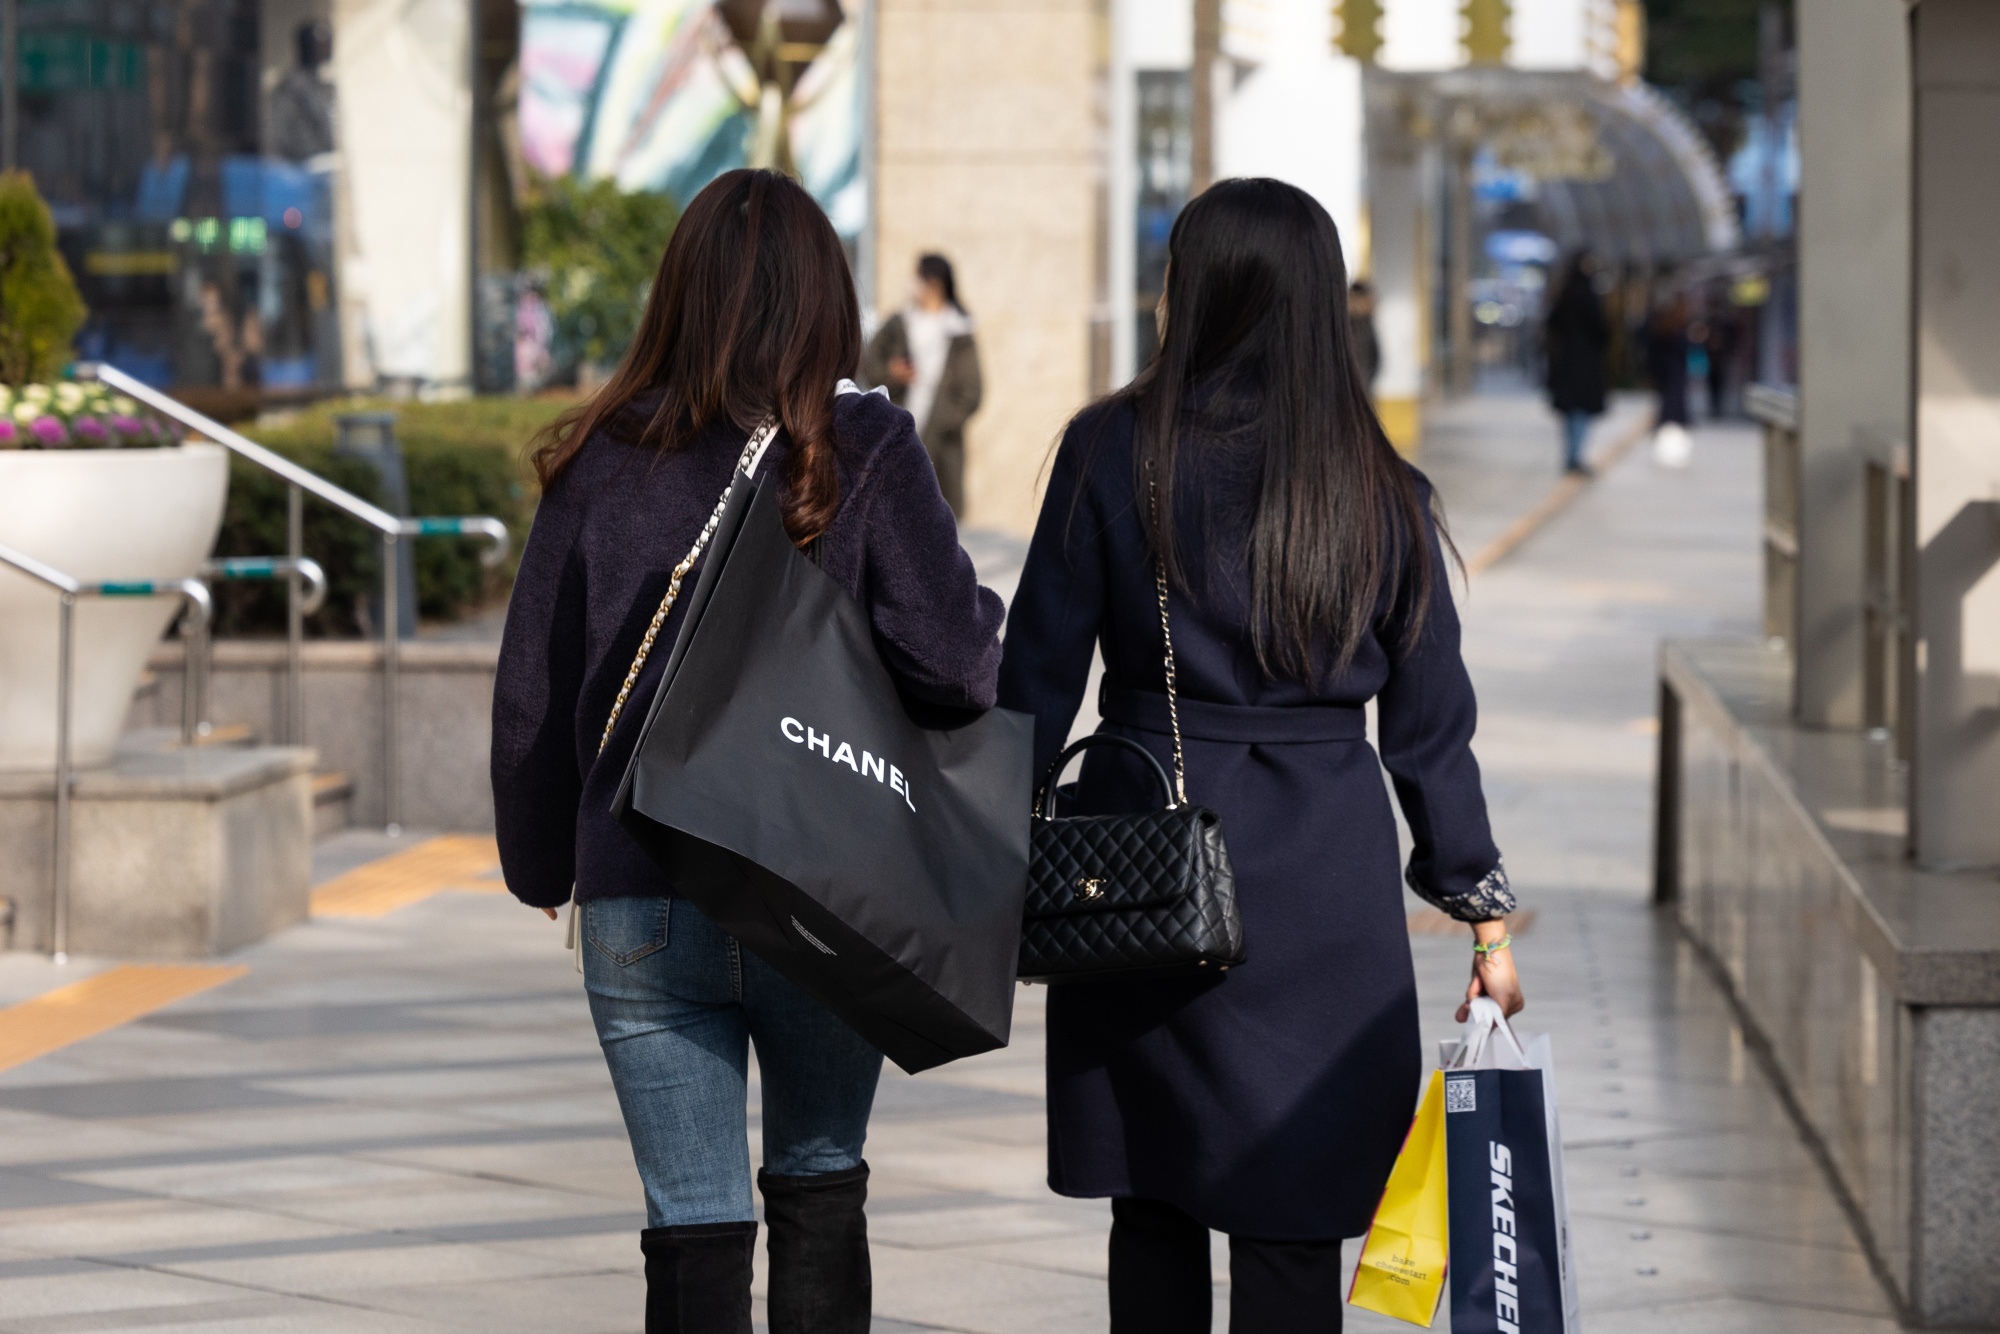 Louis Vuitton Places 1st in Luxury Brand Reputation Index - Businesskorea